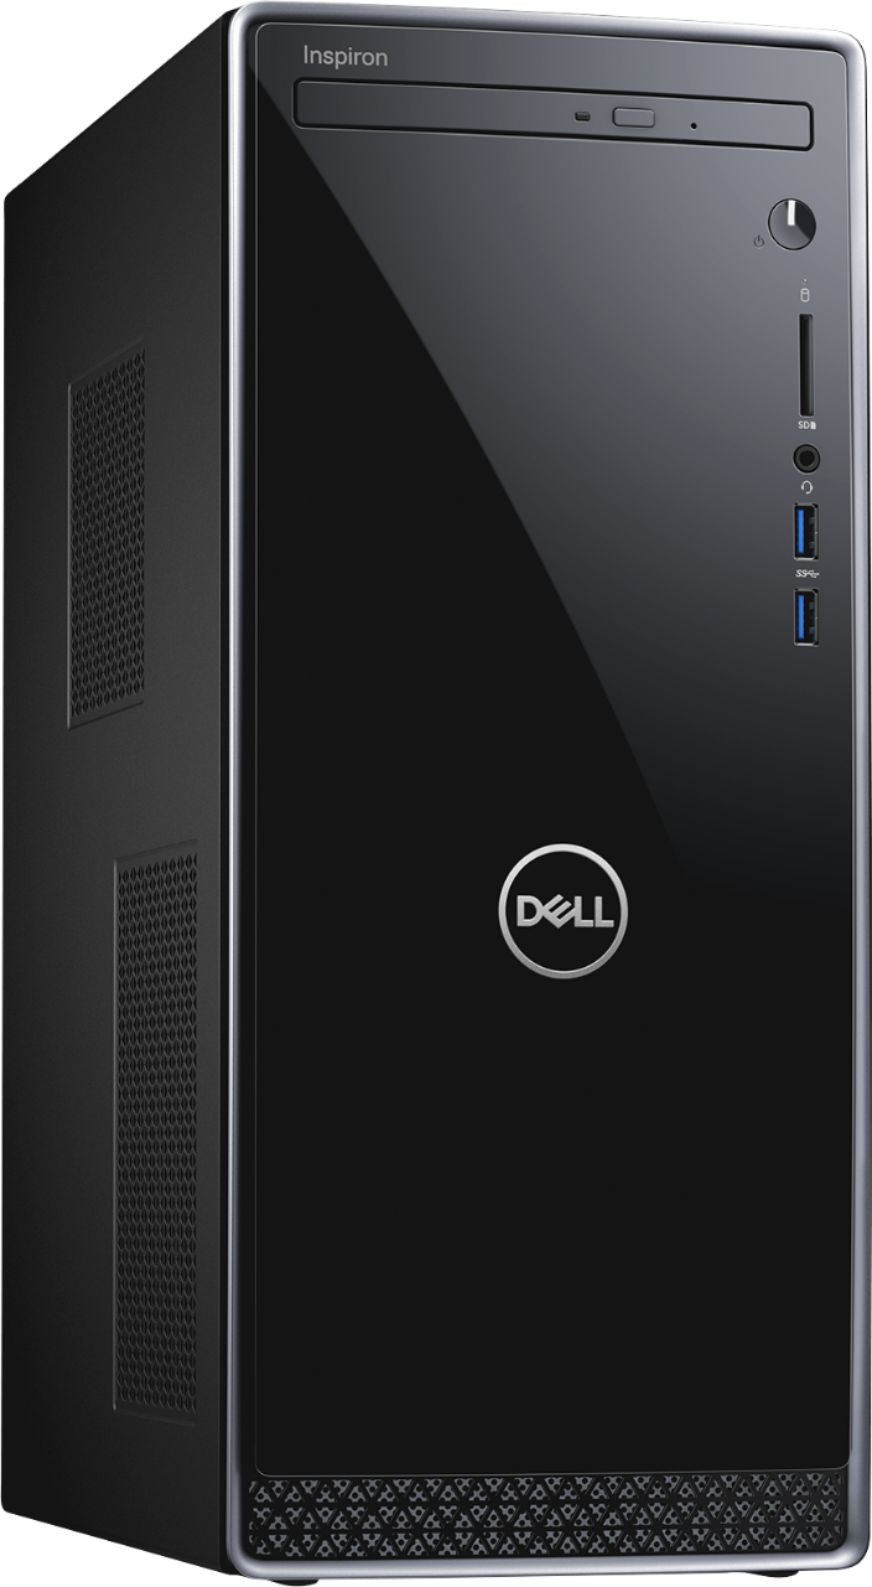 Dell Inspiron Desktop Intel Core i5 Memory 1TB Hard Drive With Silver Trim - Best